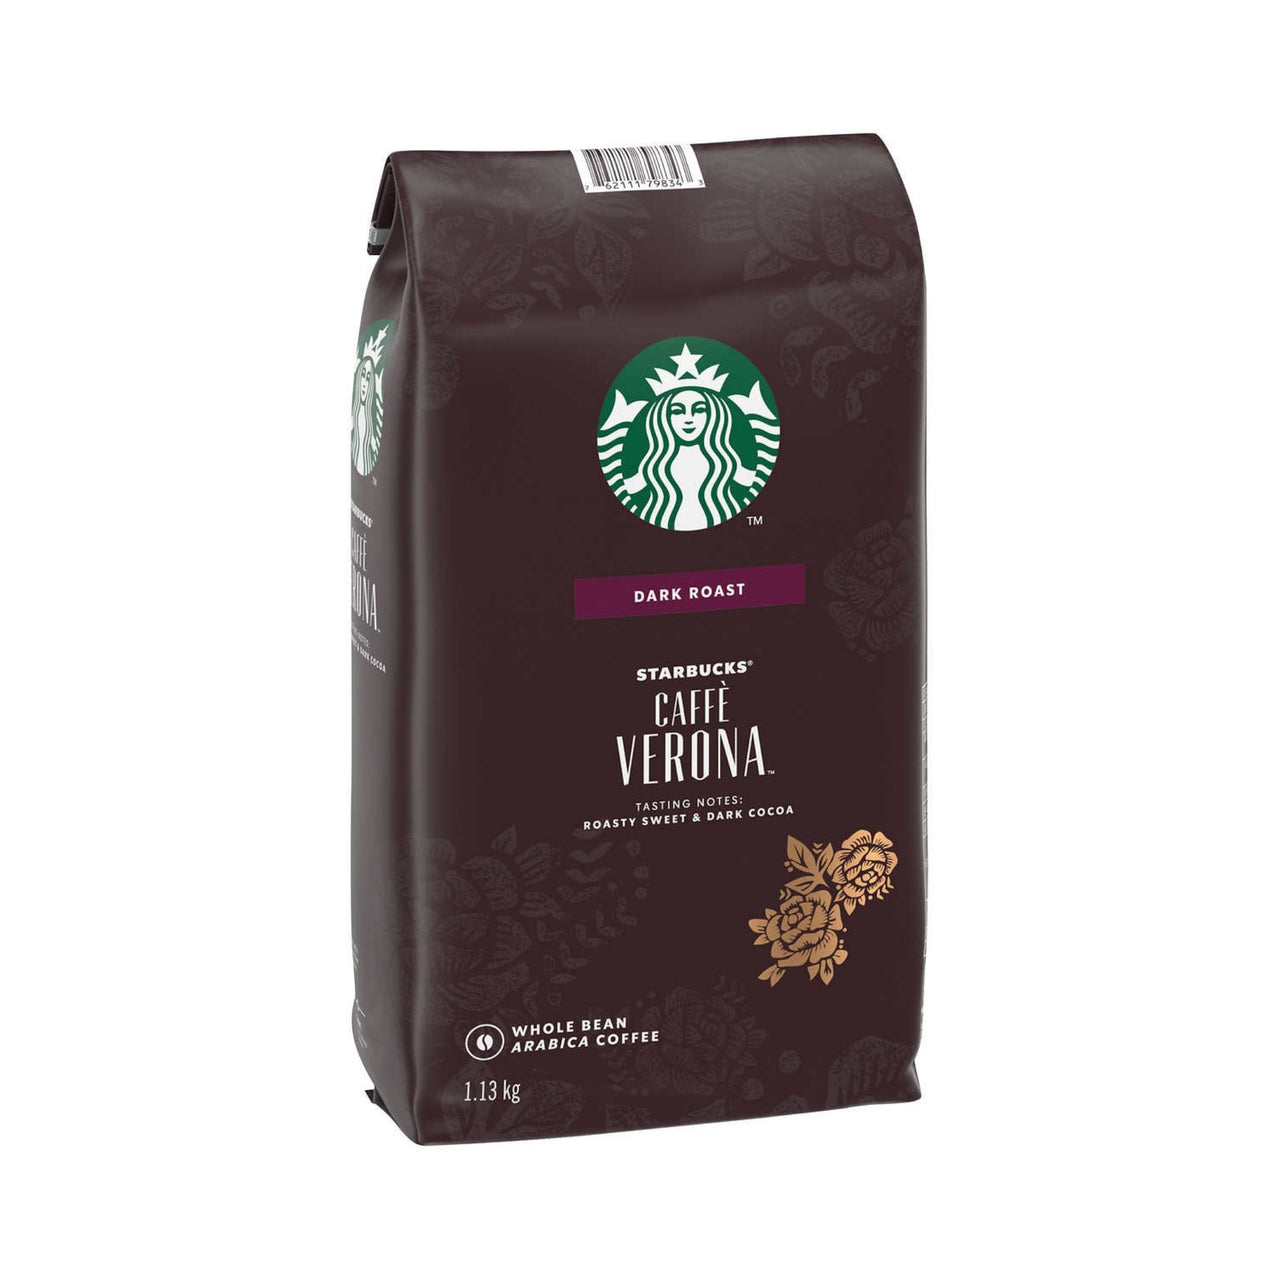 Image of Starbucks Café Verona Whole Bean Coffee 1.13kg